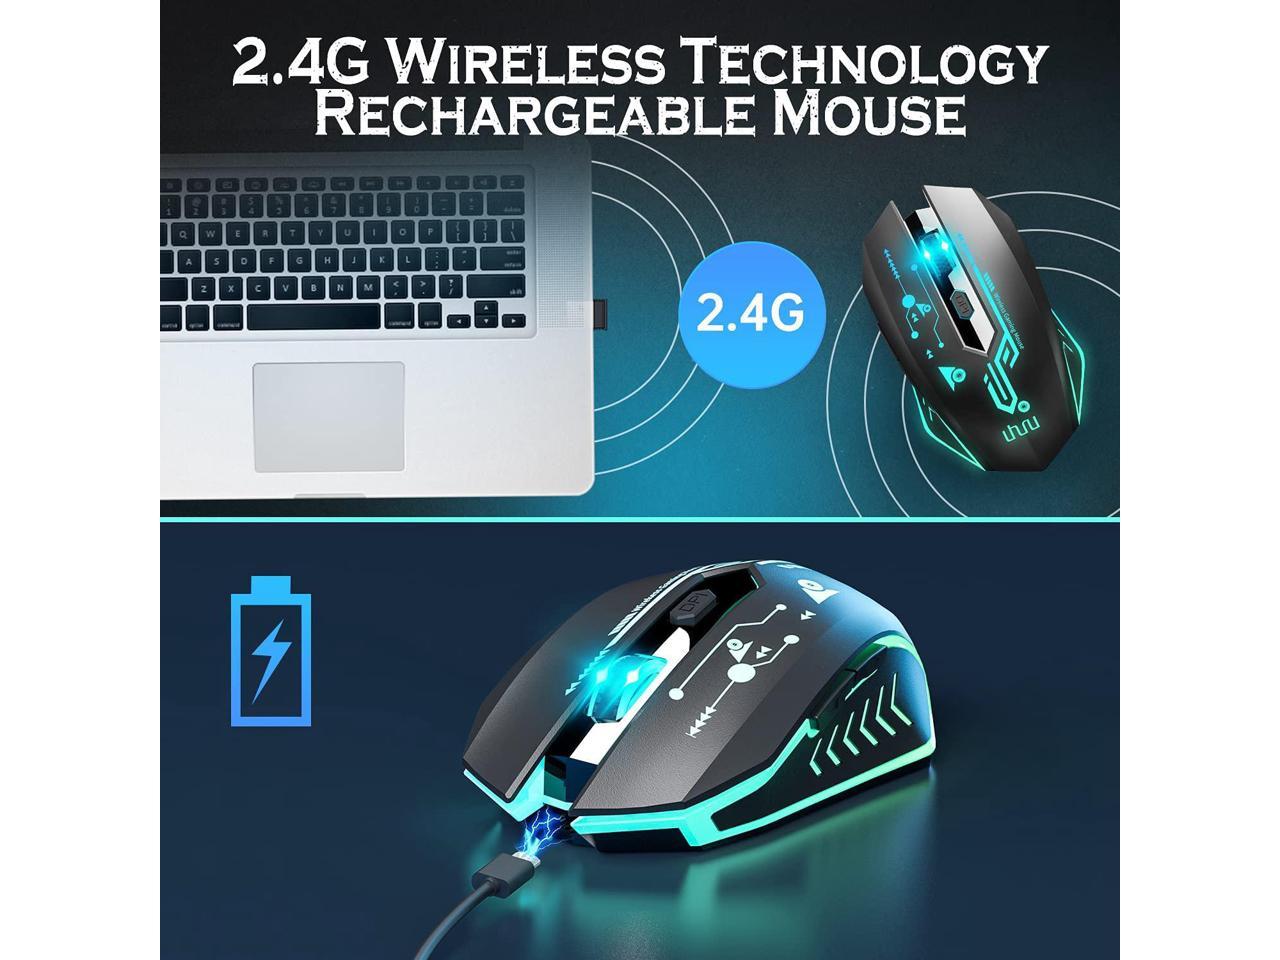 UHURU WM-02Z Wireless Gaming Mouse, 2.4G Wireless Rechargeable